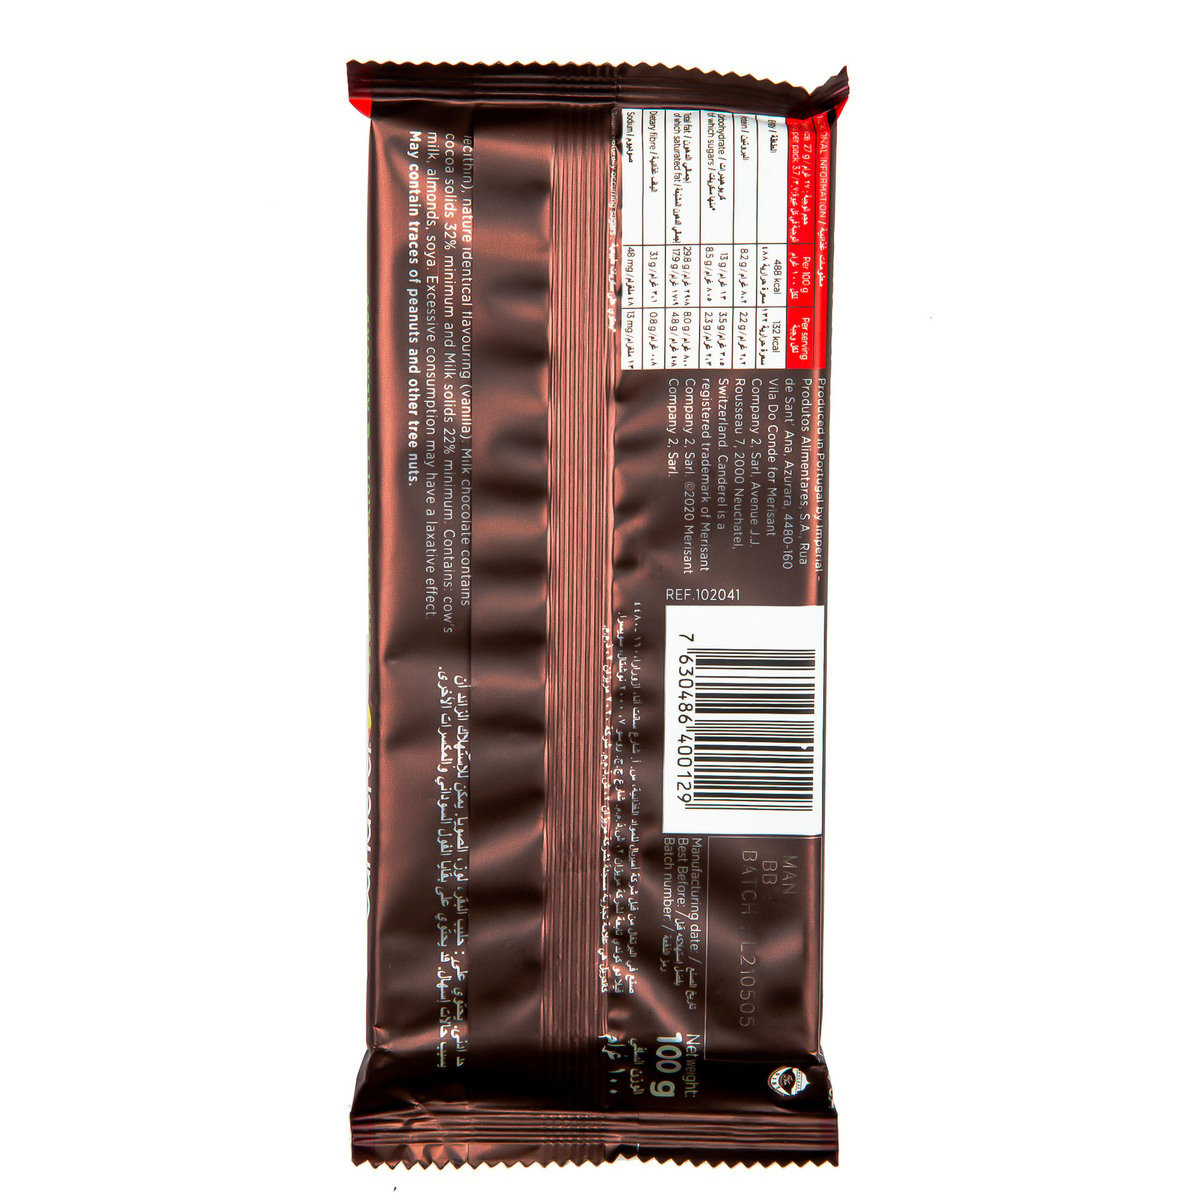 Canderel Milk Chocolate Decadent Crispy & Almonds 100 g